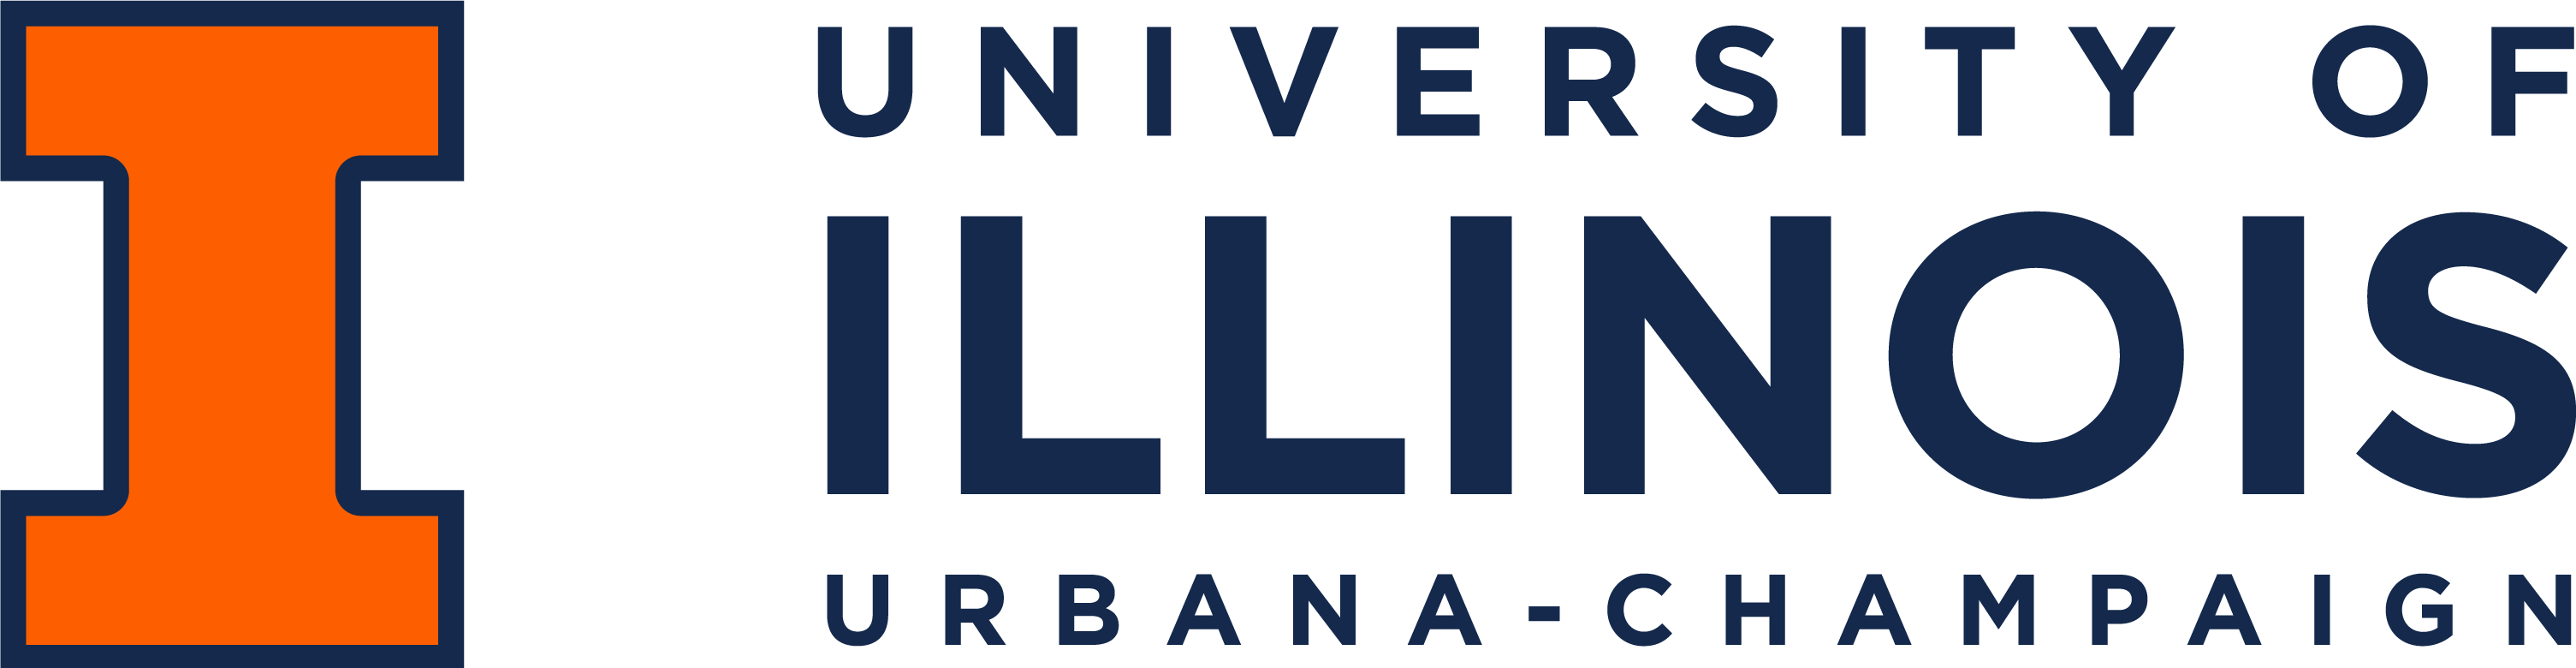 University of Illinois Wordmarks